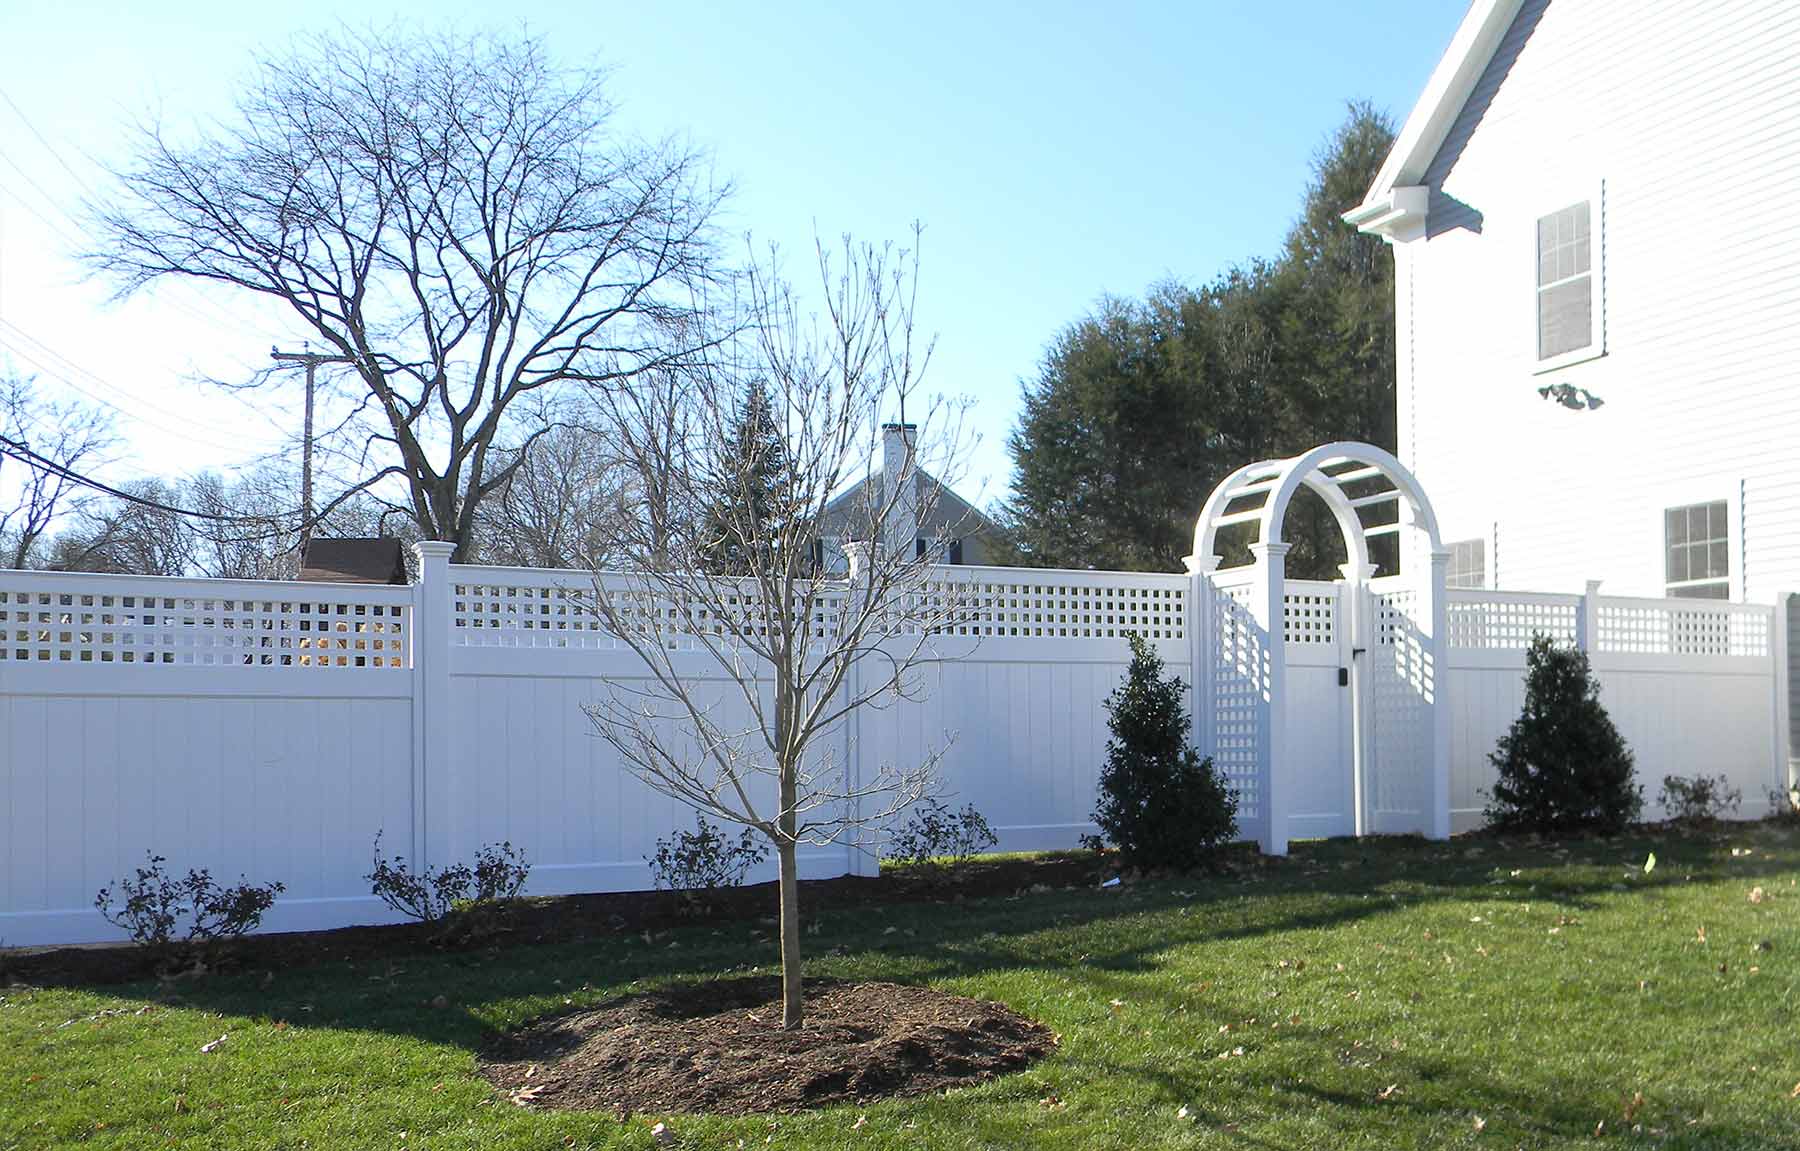 Fence Installation in Dedham, Massachusetts - Bottom 4